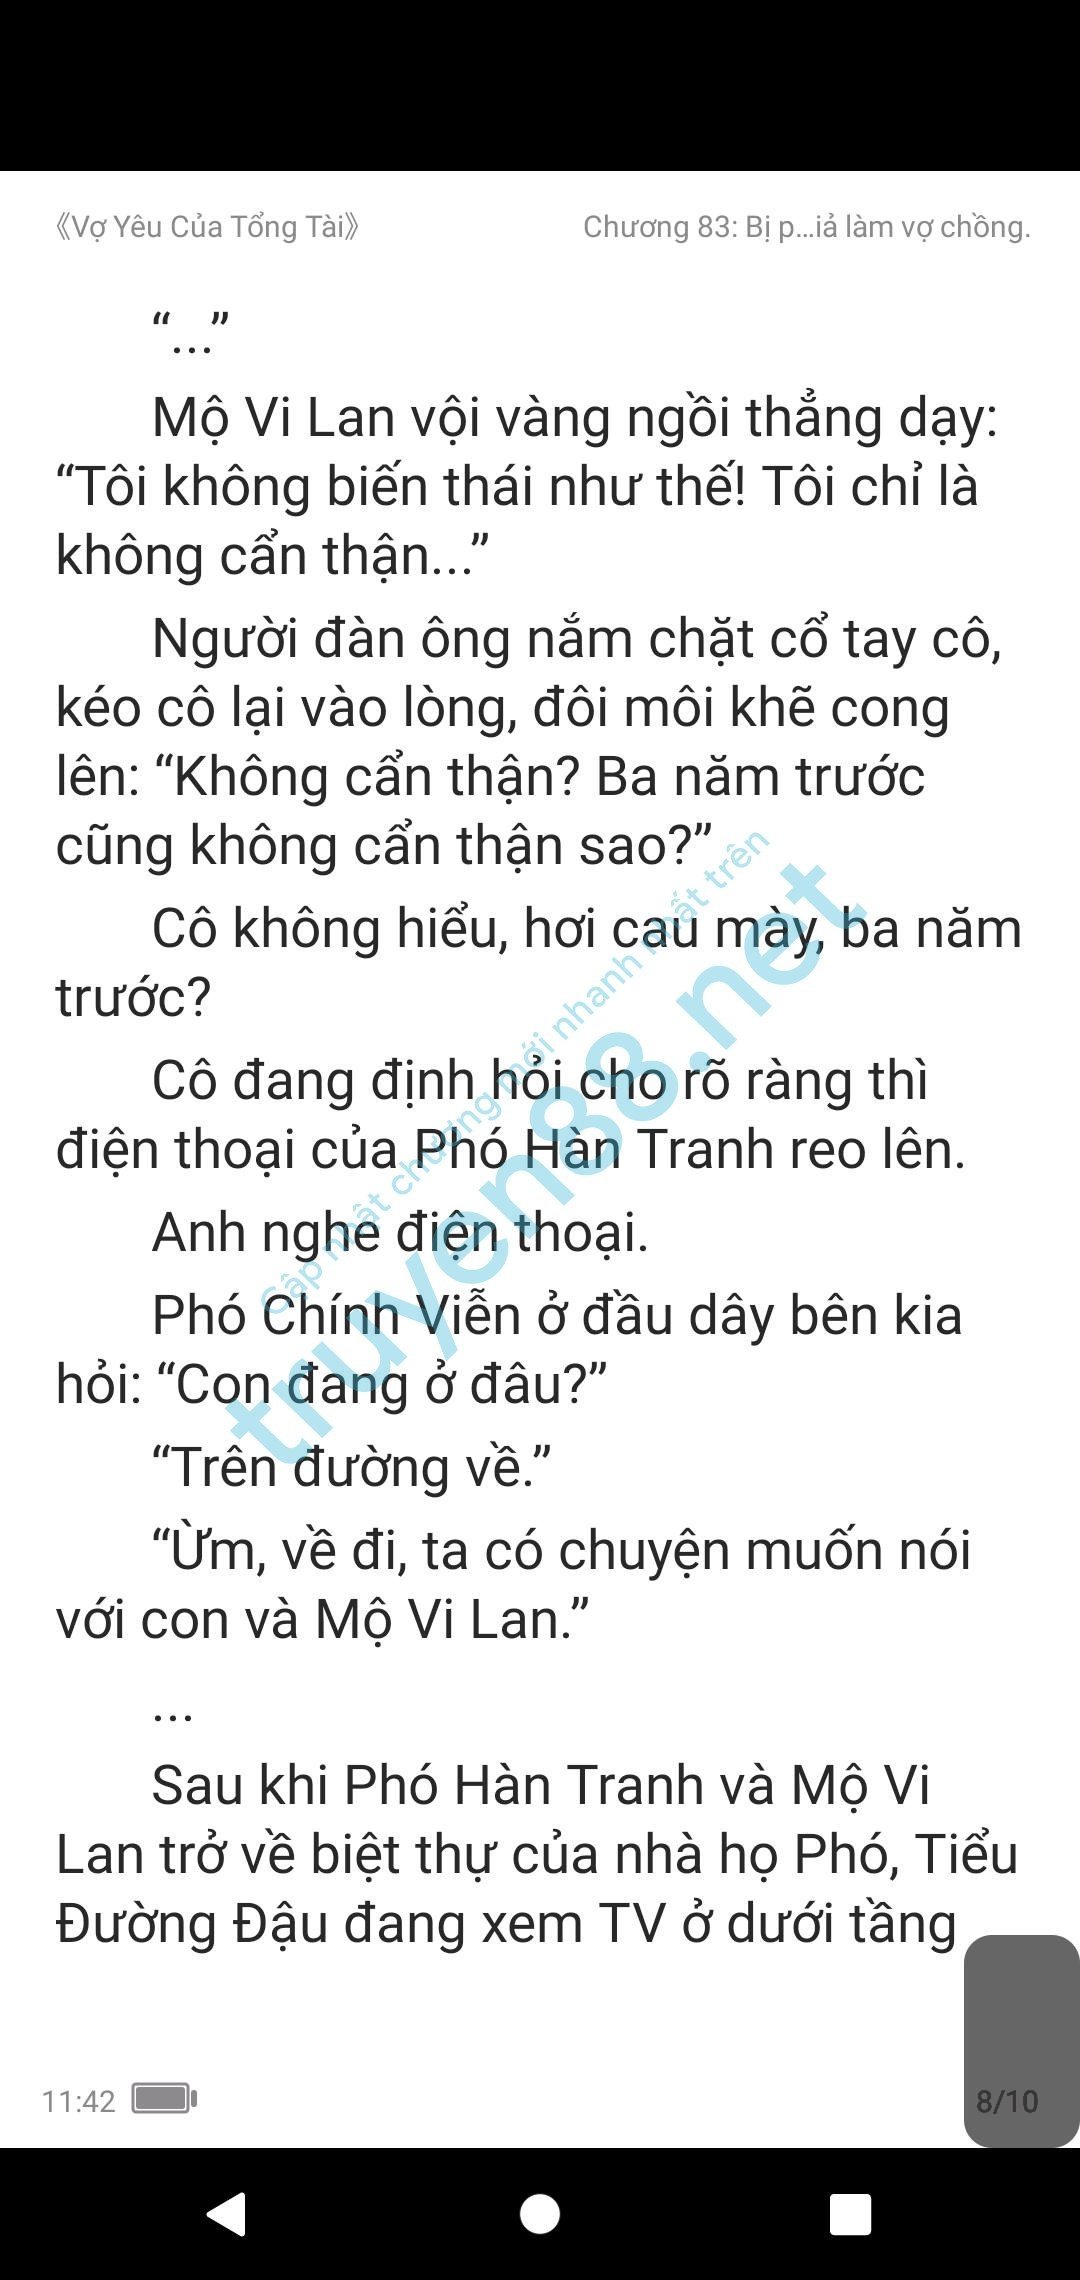 vo-yeu-cua-tong-tai-mo-vi-lan--pho-han-tranh-83-0